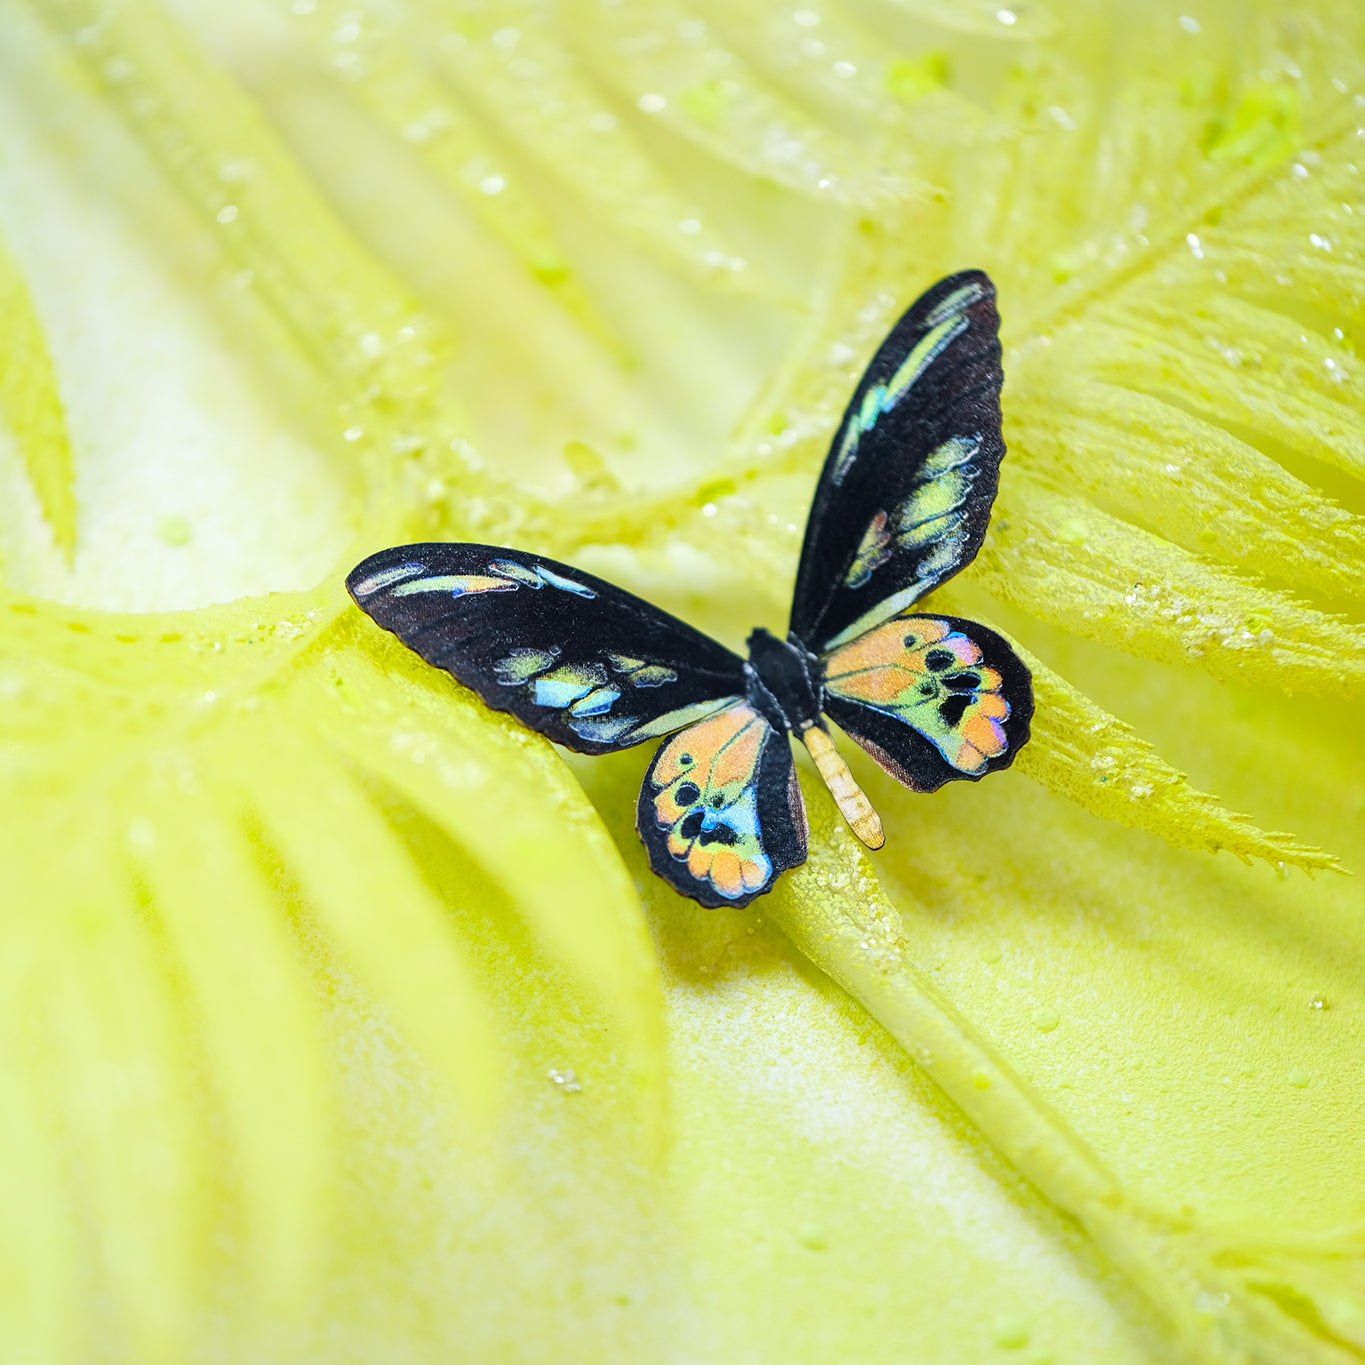 'Rothschild' Mini Butterfly Set